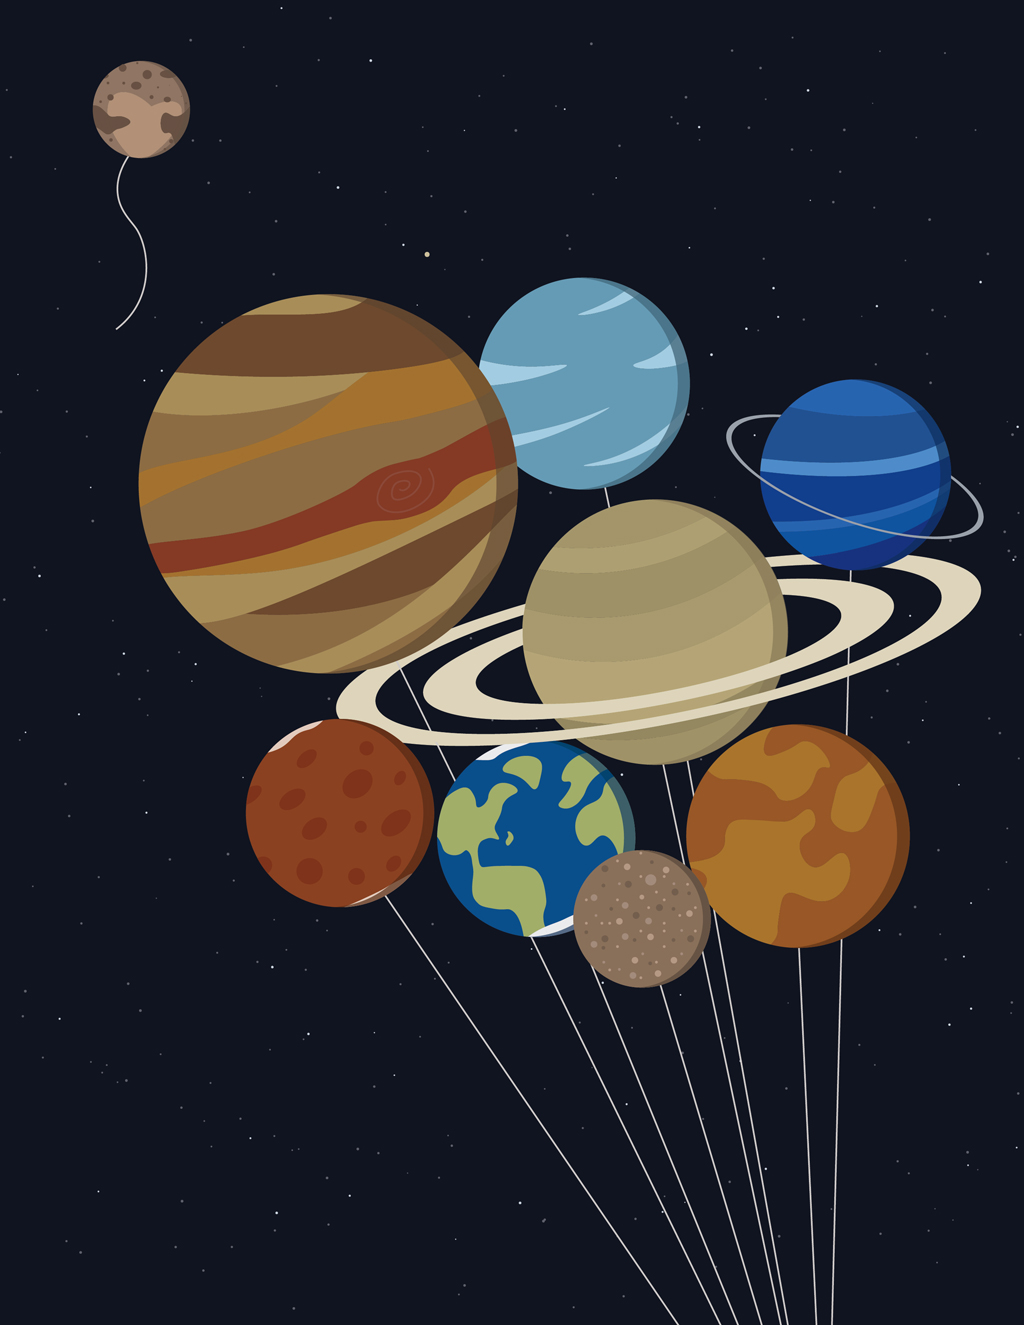 Baloon Planets full